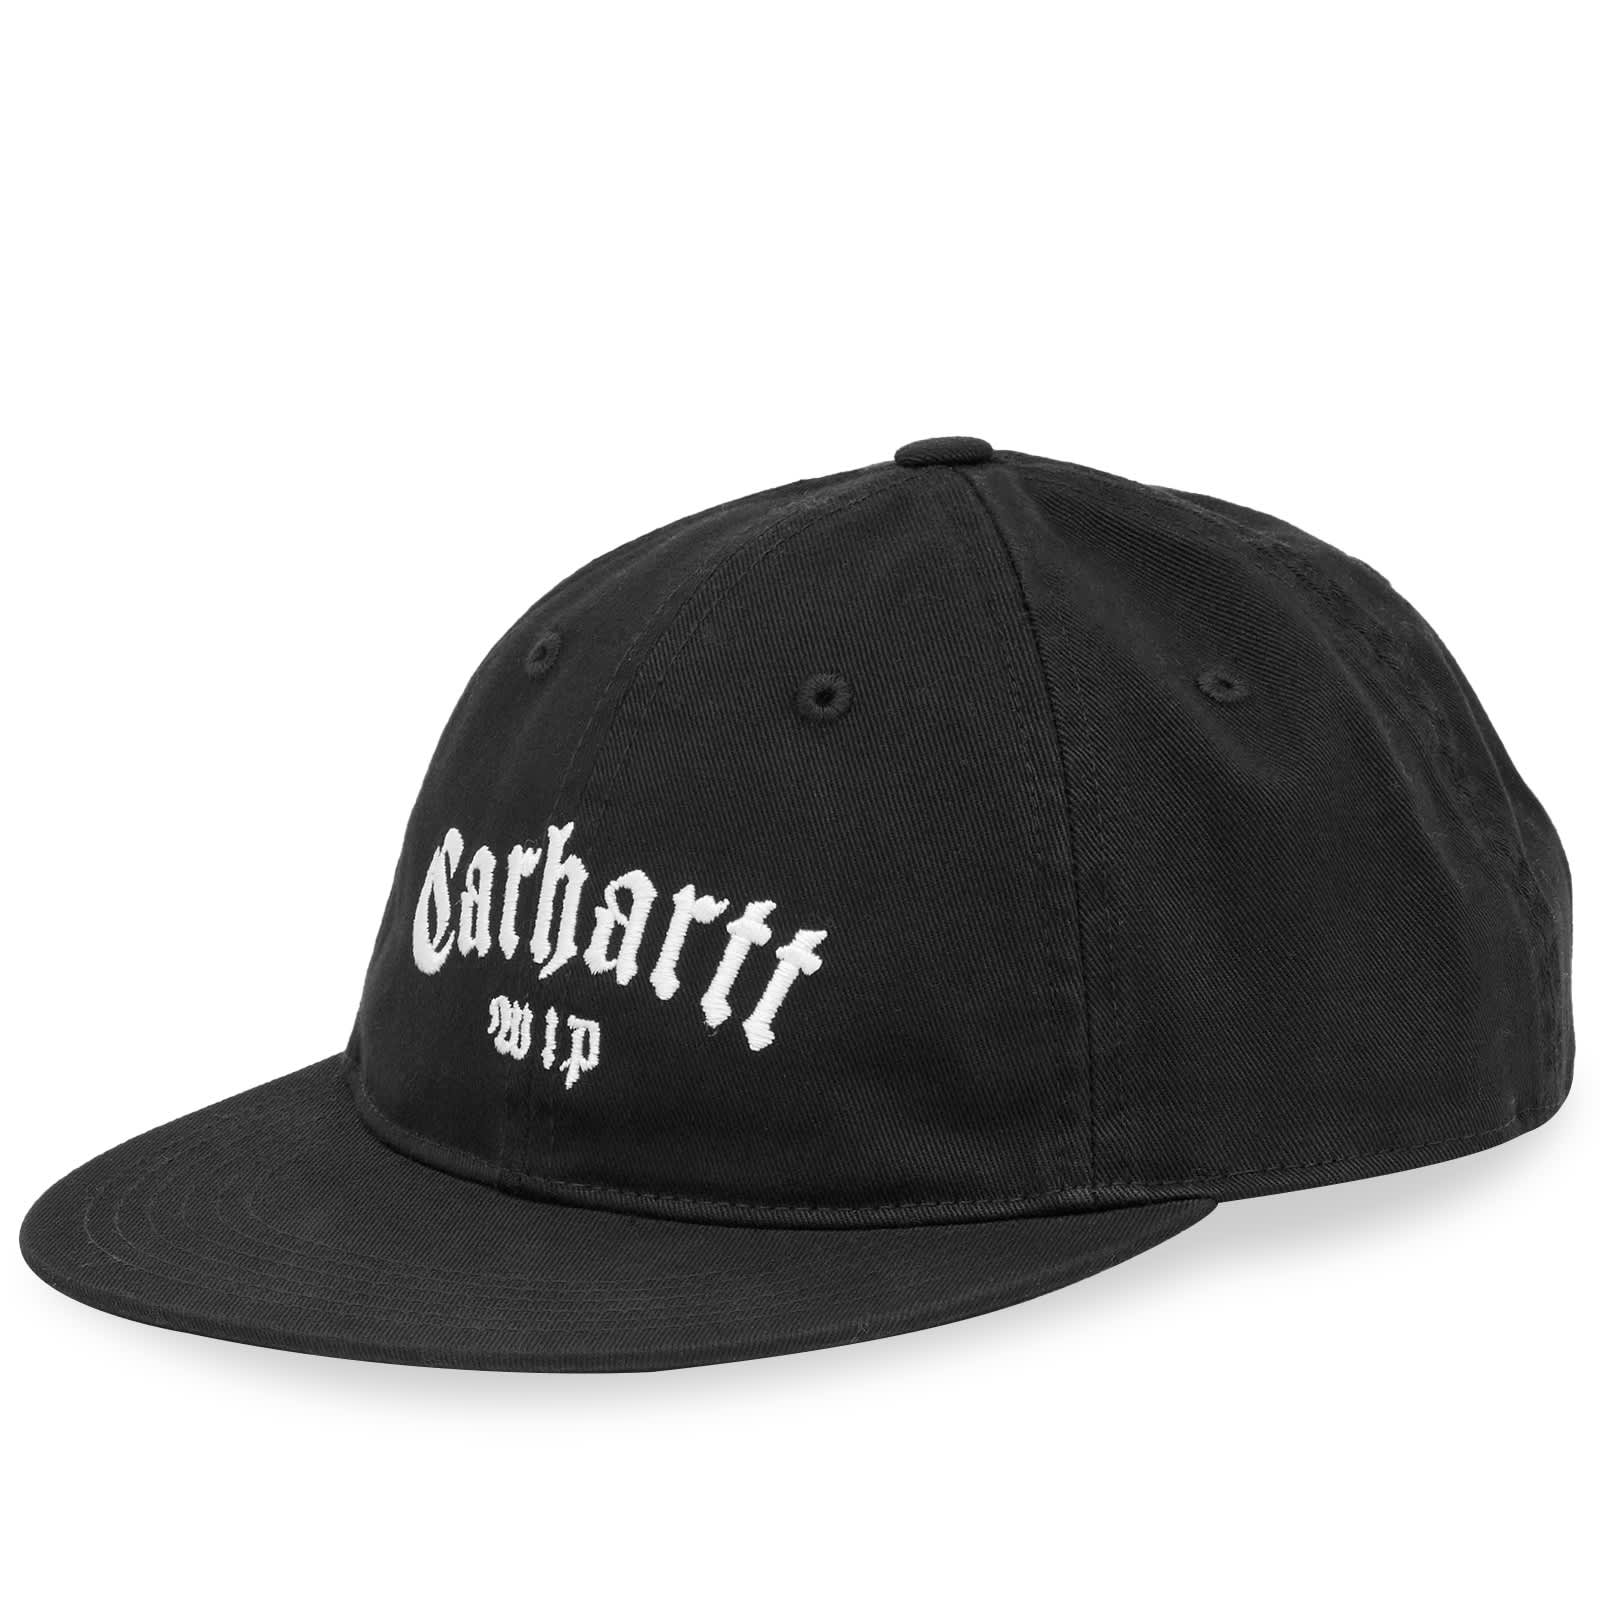 кардиган carhartt wip onyx knit цвет black Бейсболка Carhartt Wip Onyx, цвет Black & White